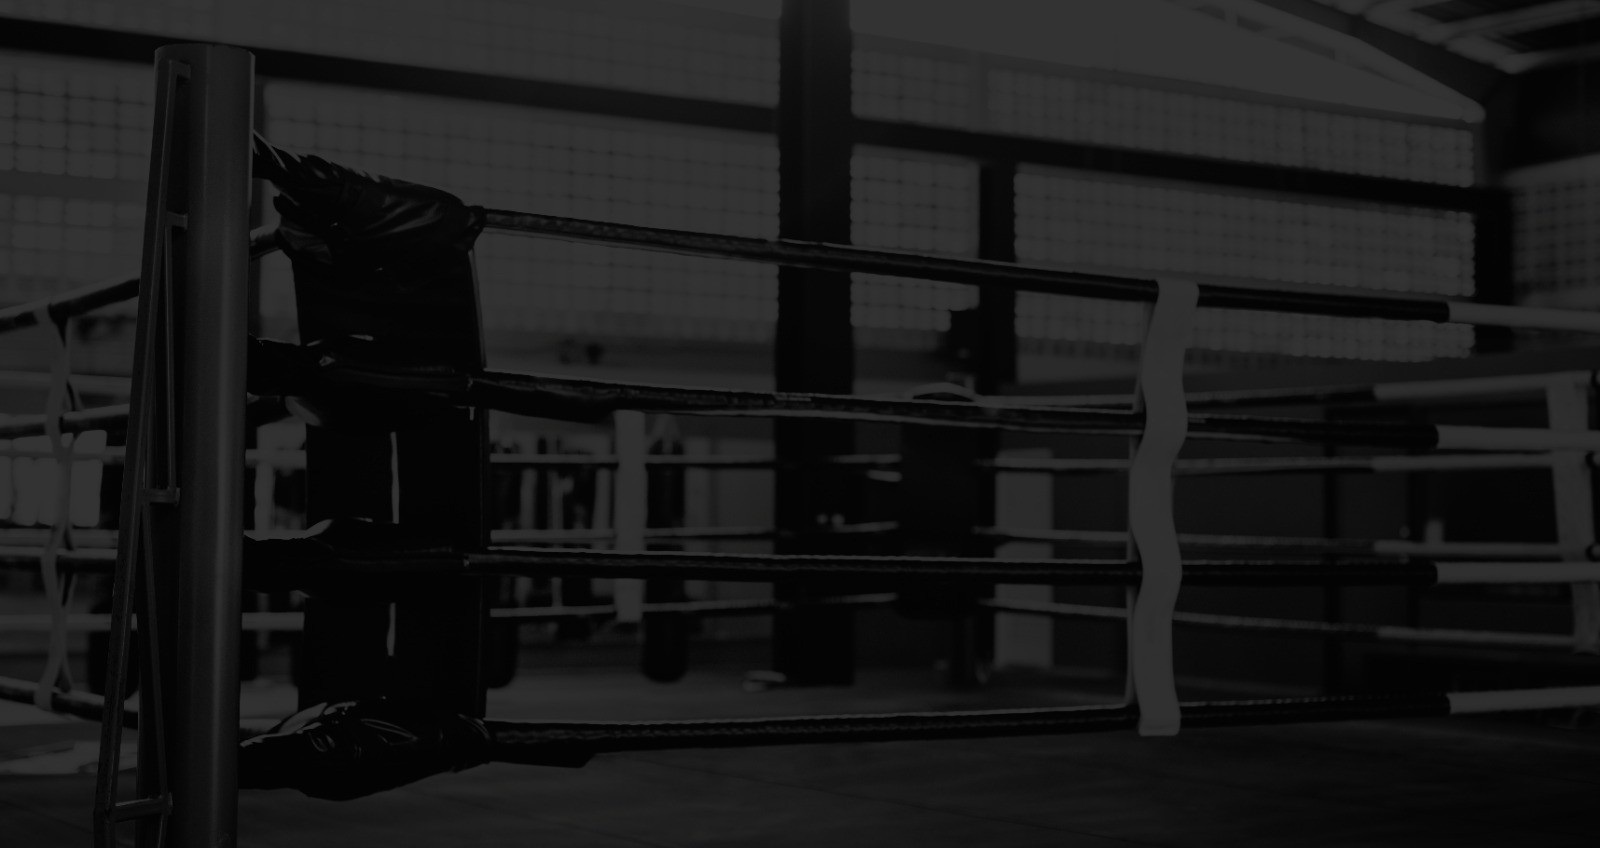 Boxing Gym Dublin